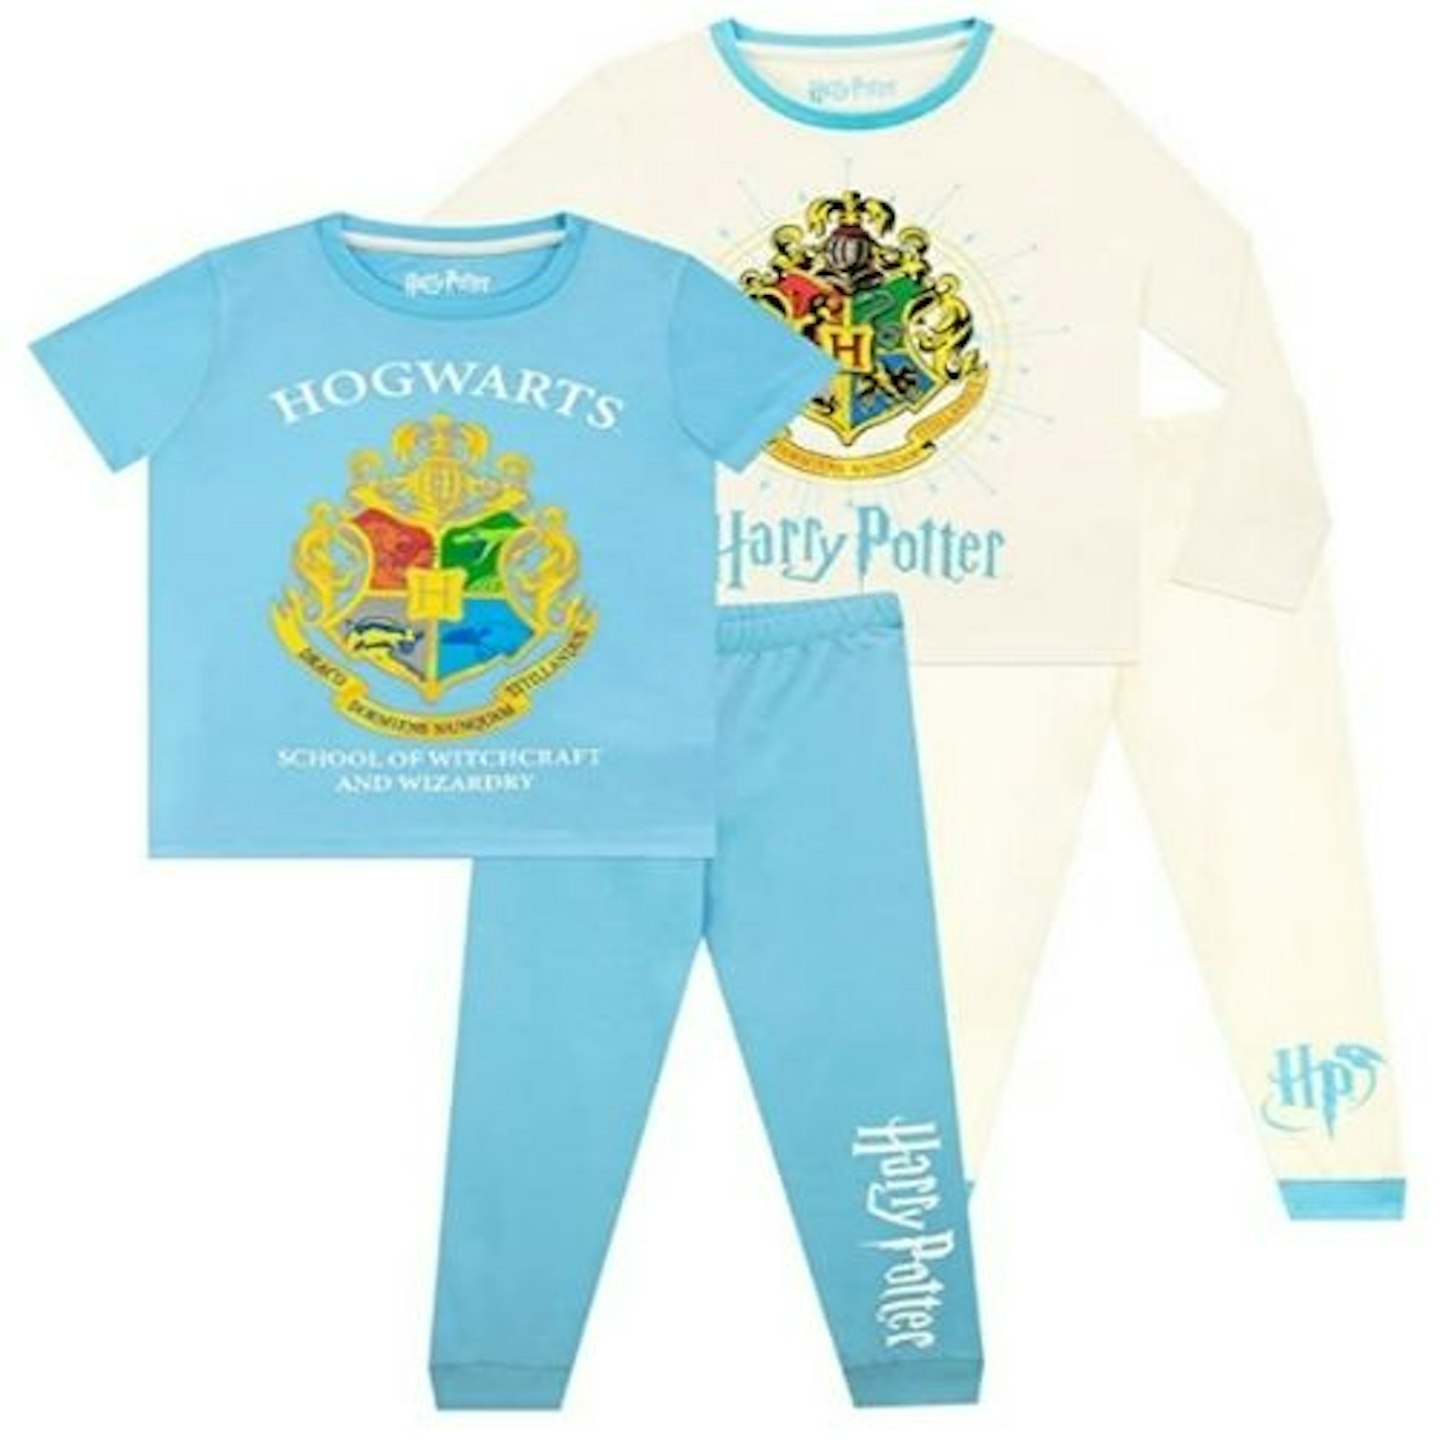 Harry Potter Hogwarts Pyjamas 2 Pack